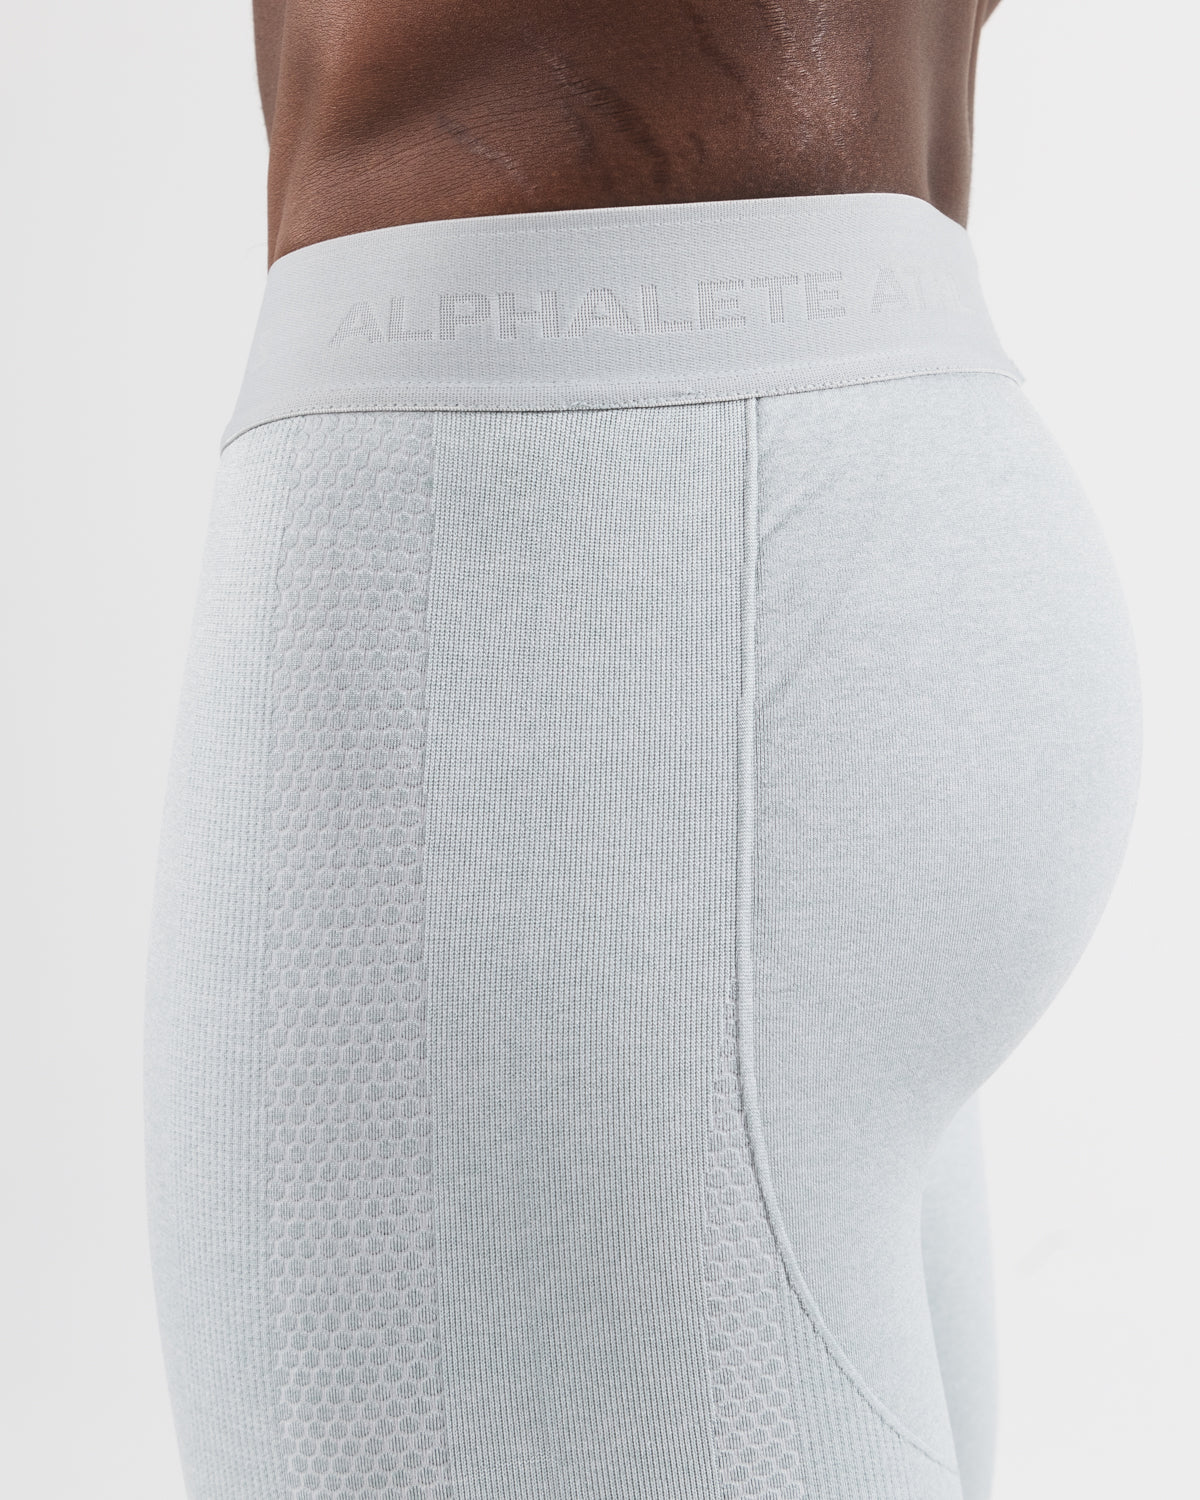 Alphalete Revival Shorts Gray - $35 (12% Off Retail) - From Sierra